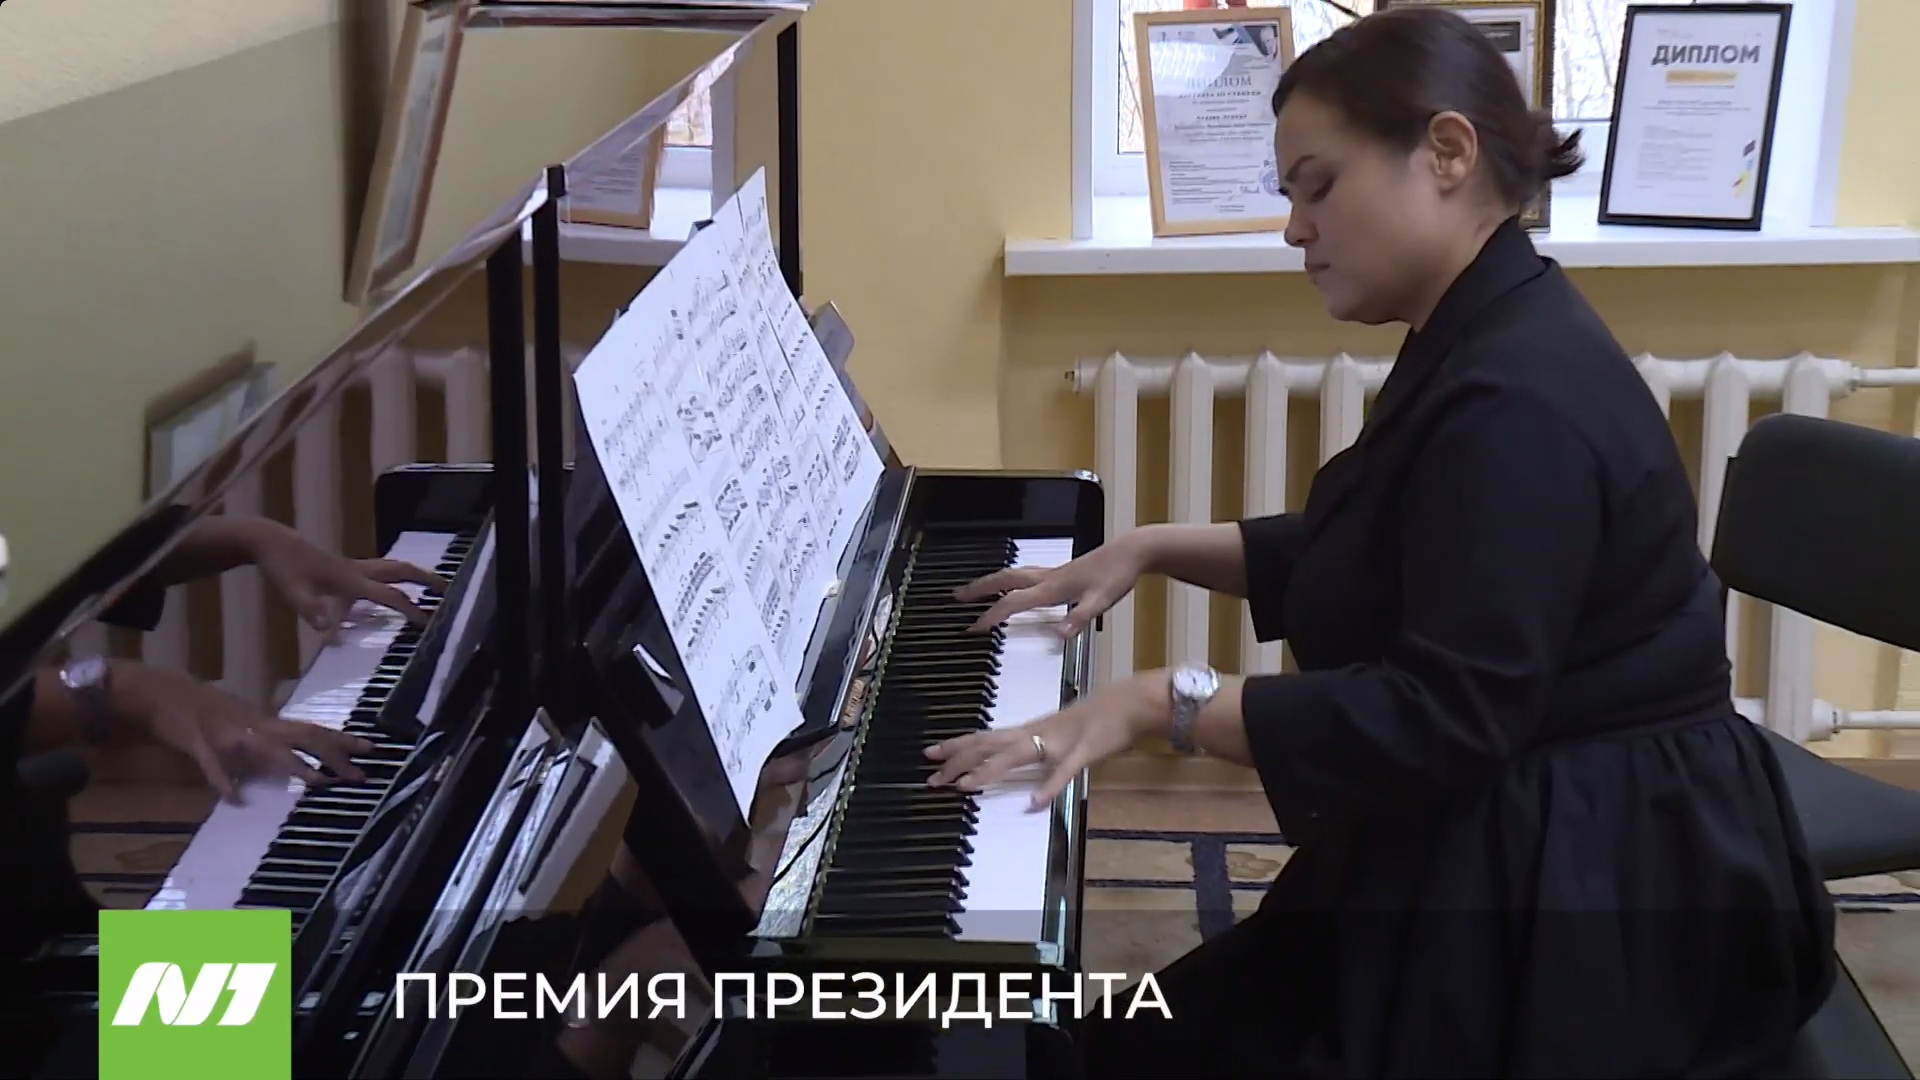 Ильчибаева Лиана Германовна за фортепиано. Скриншот с репортажа